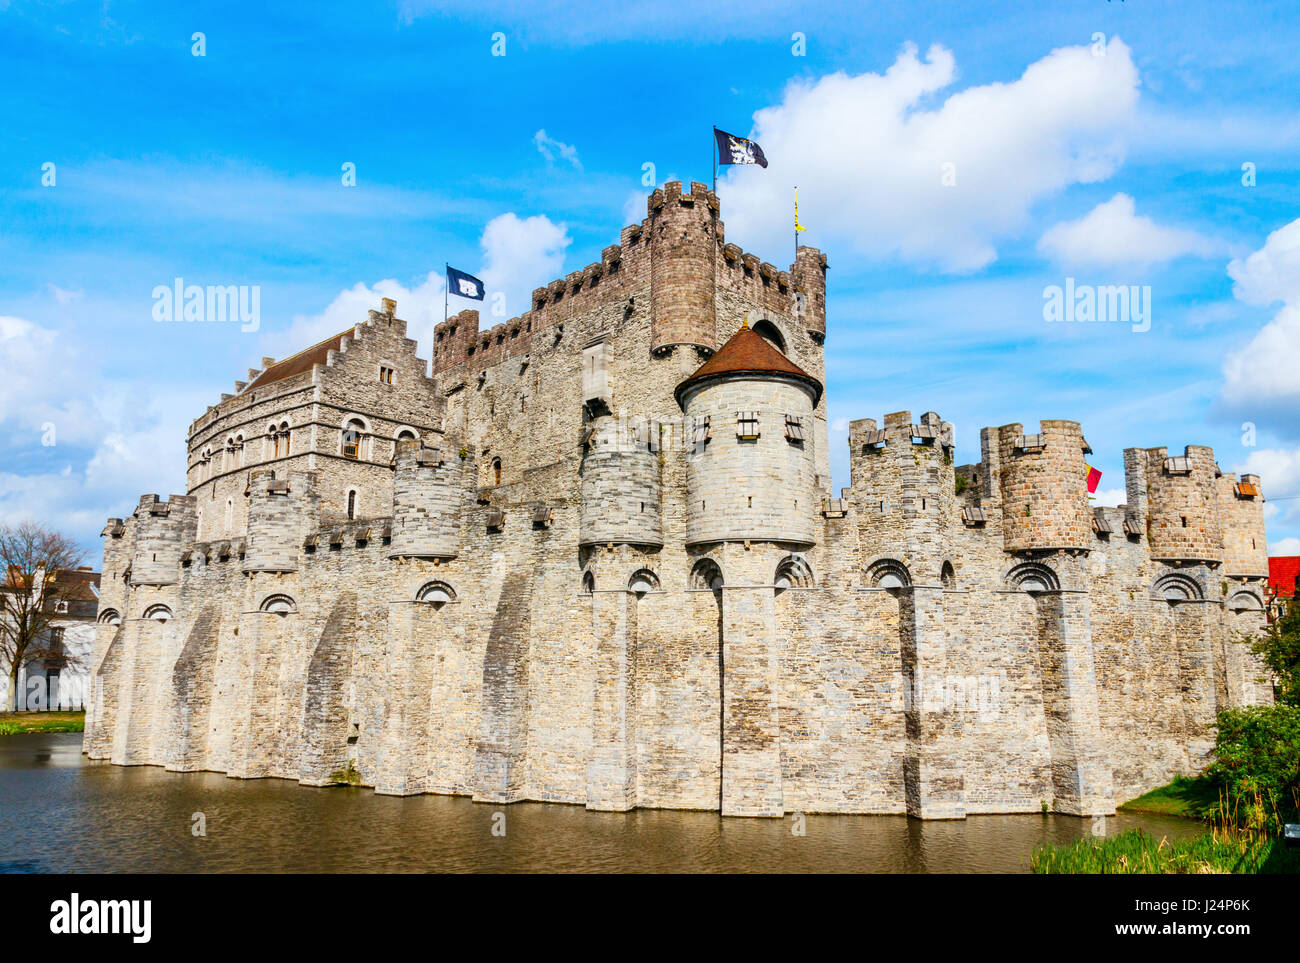 The medieval castle Gravesteen under a blue sky. Ghent, Belgium. Stock Photo